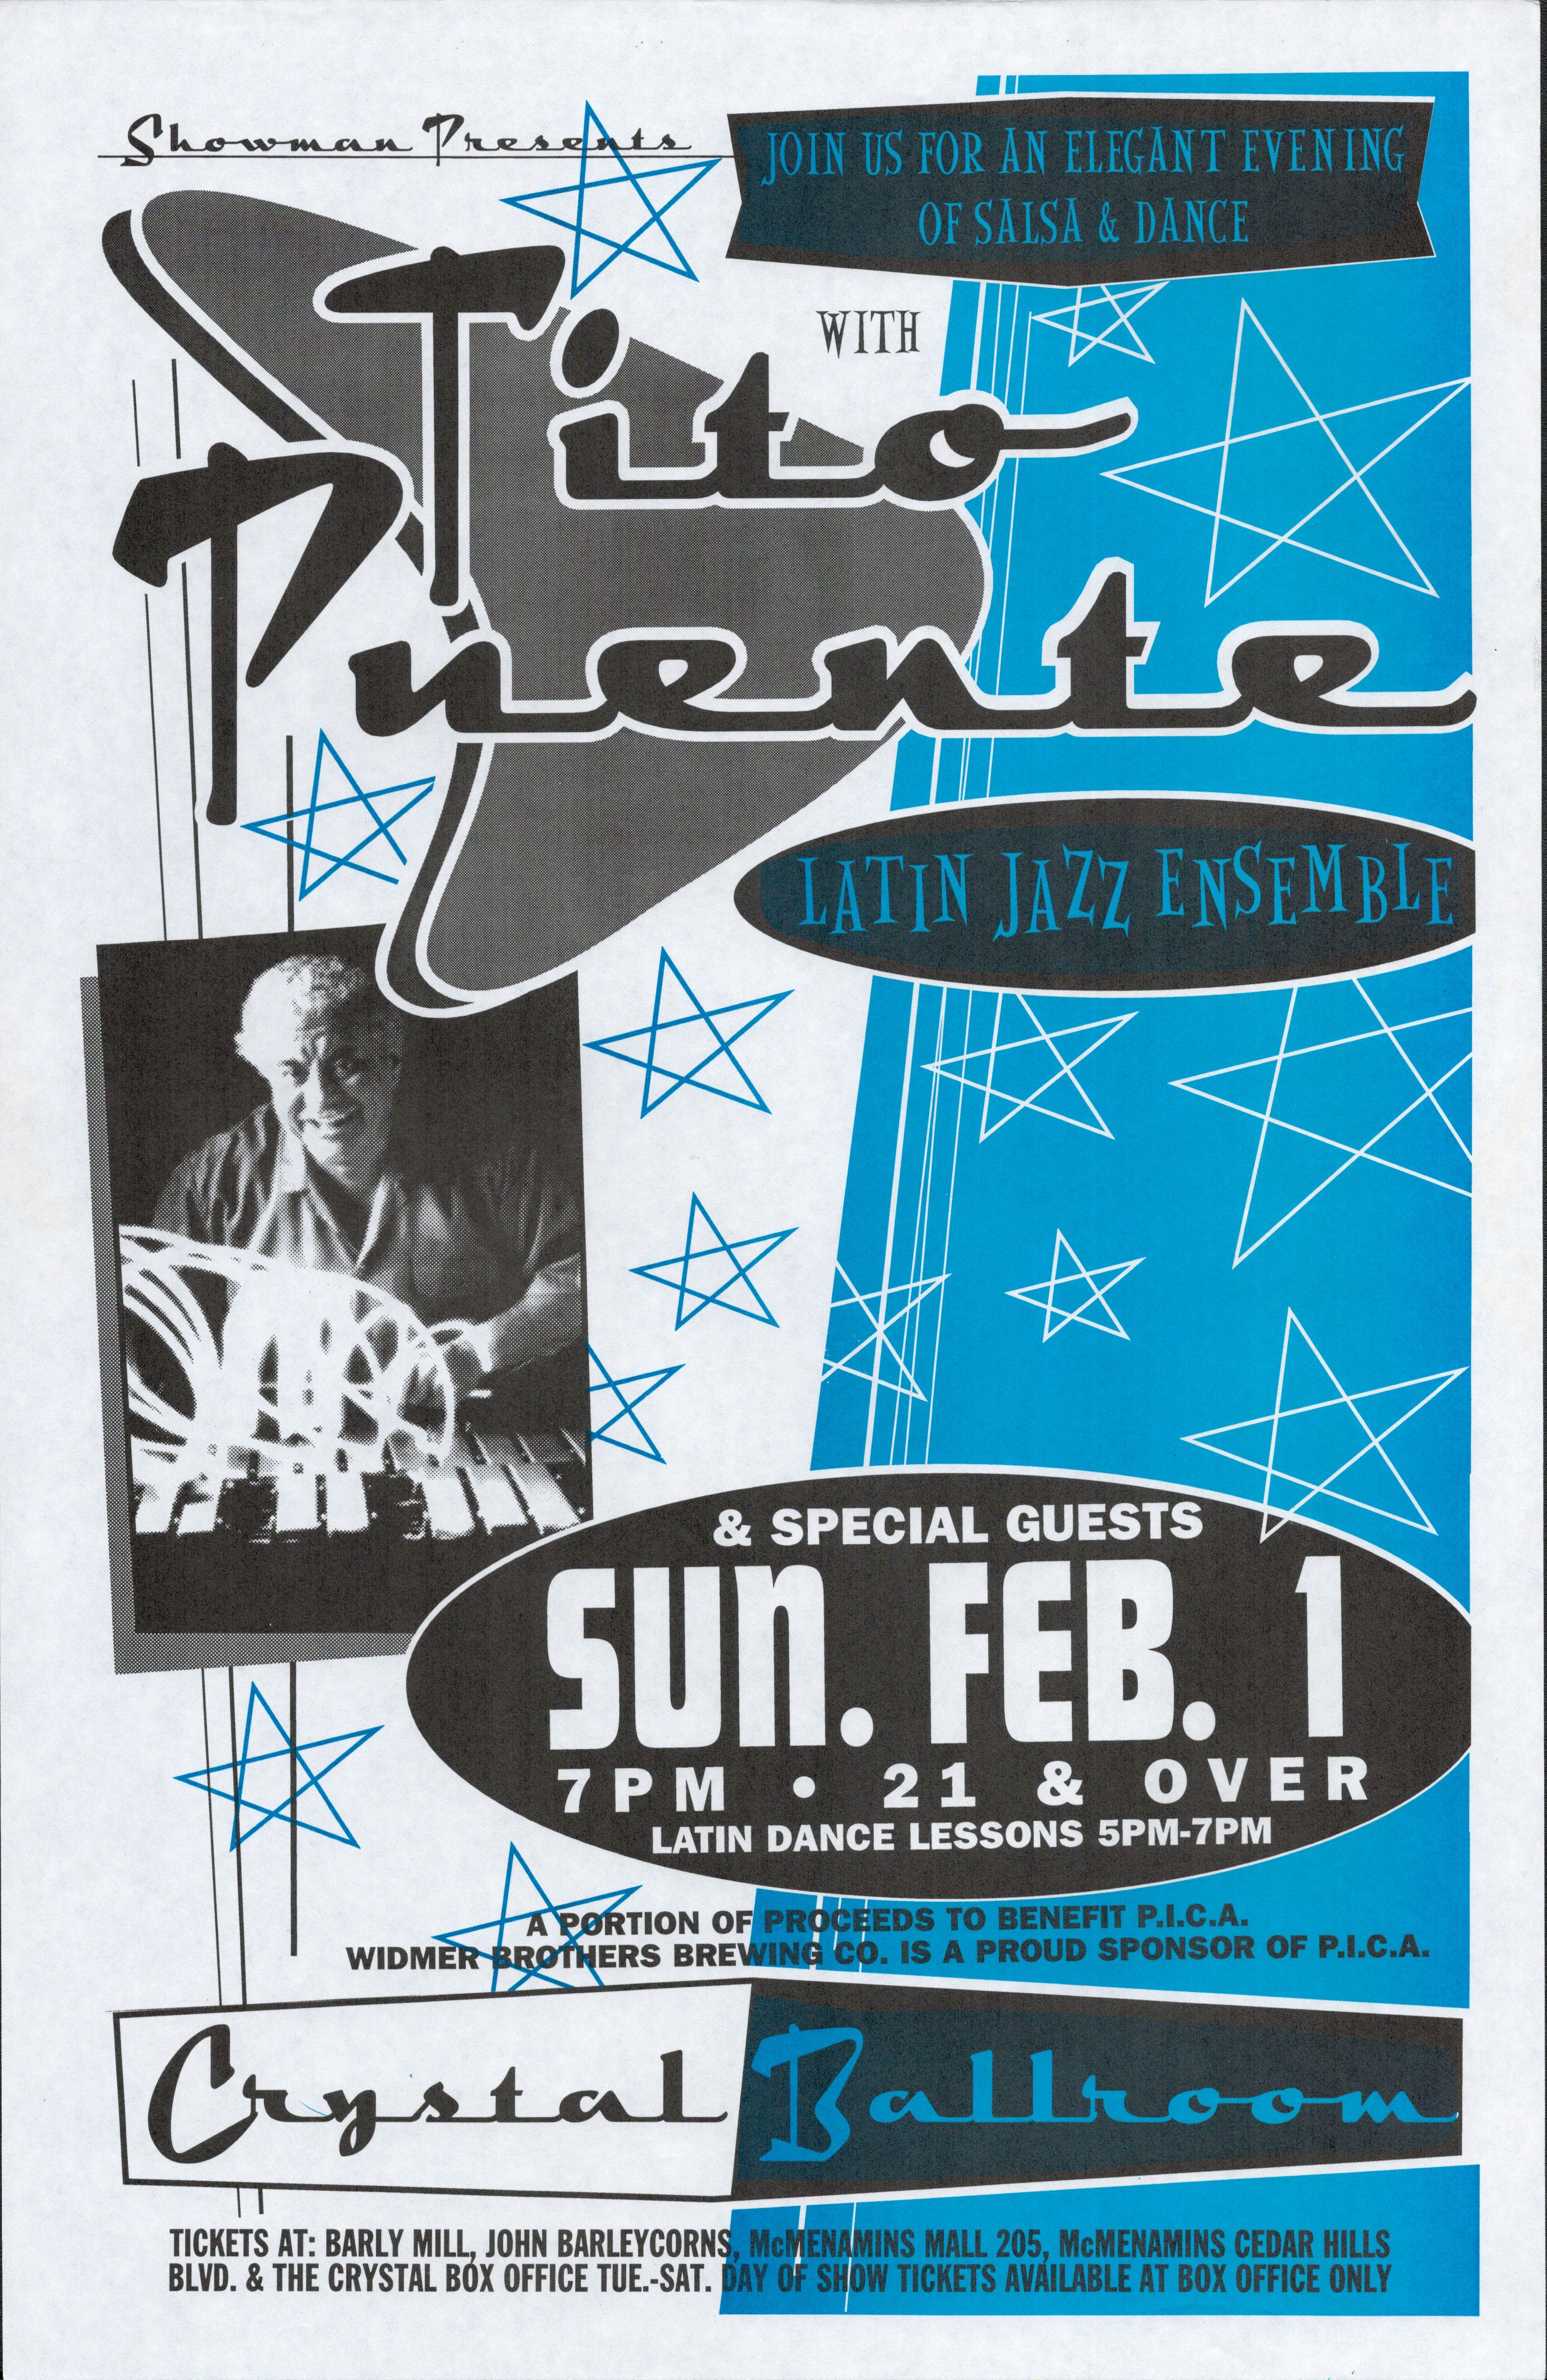 MXP-249.1 Tito Puente Crystal Ballroom 1998 Concert Poster